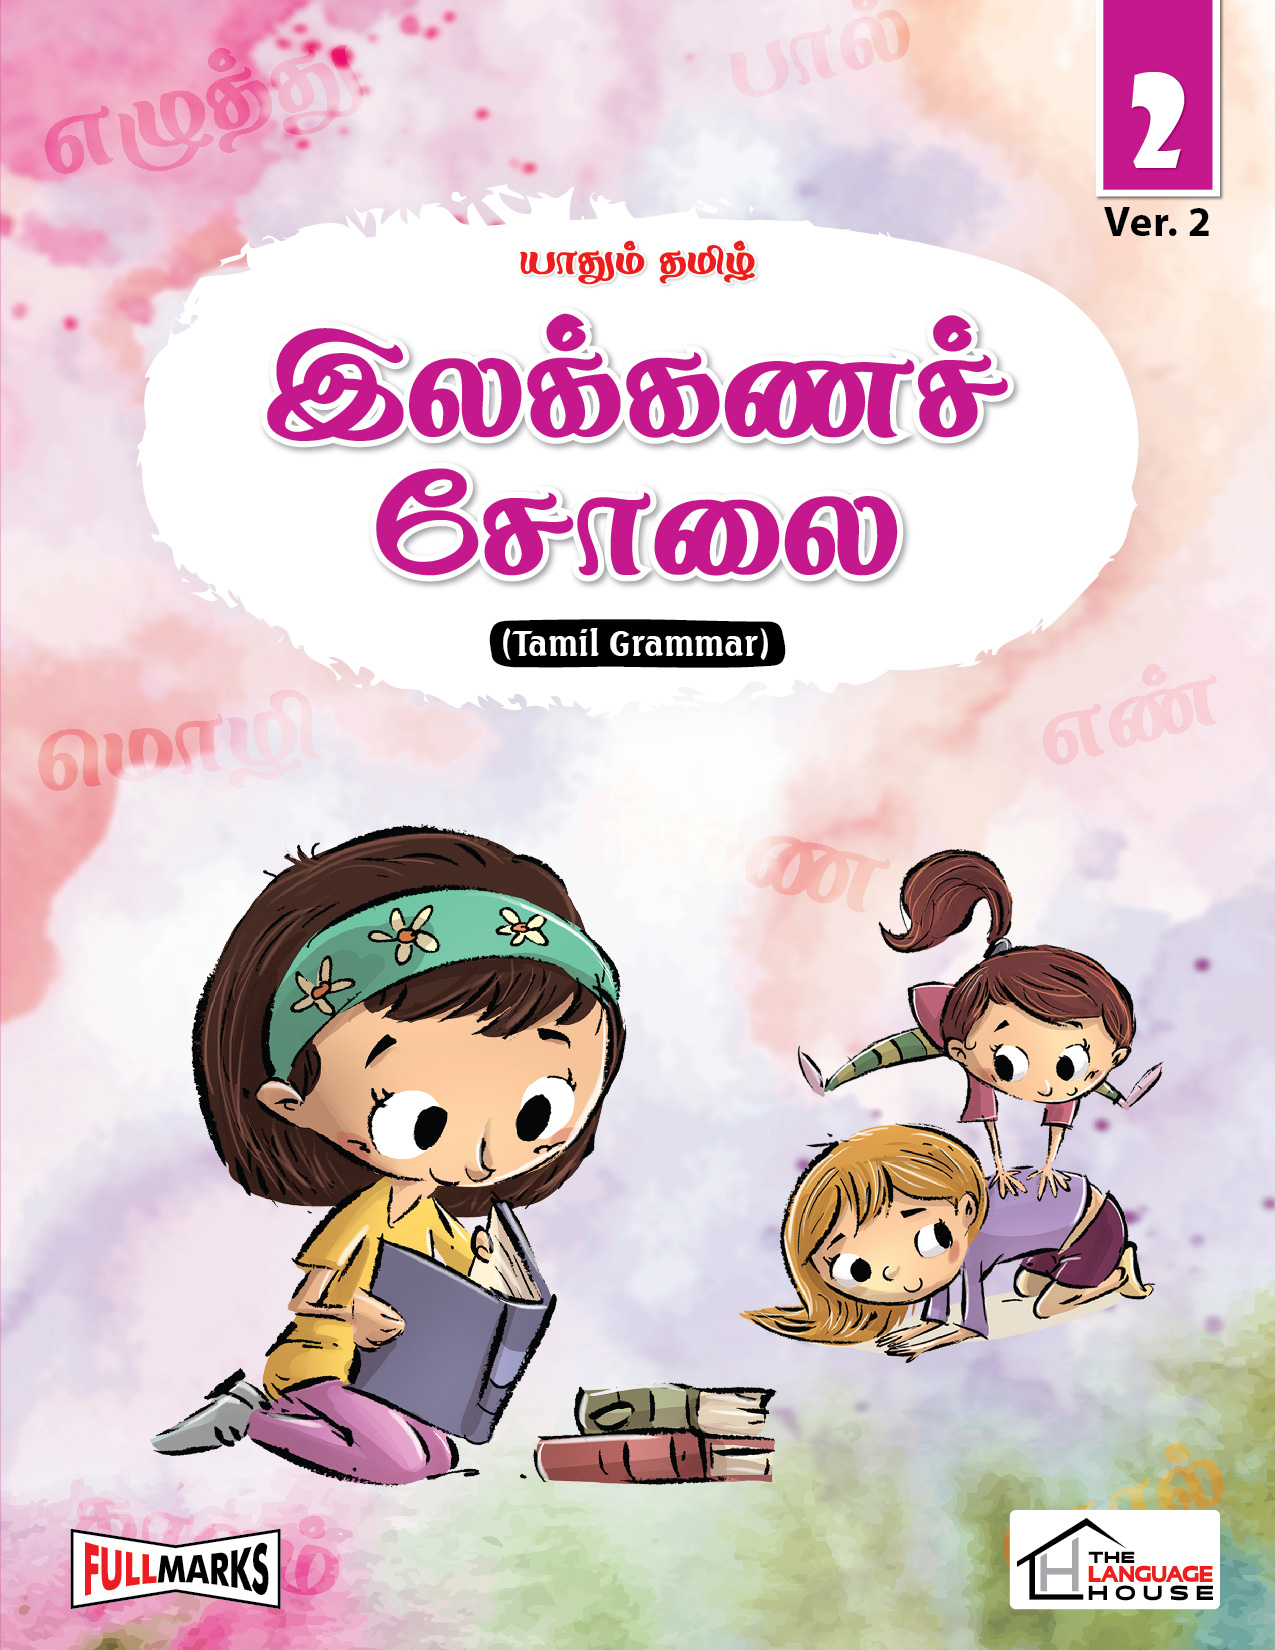 Tamil Grammar Ver. 2 Class 2